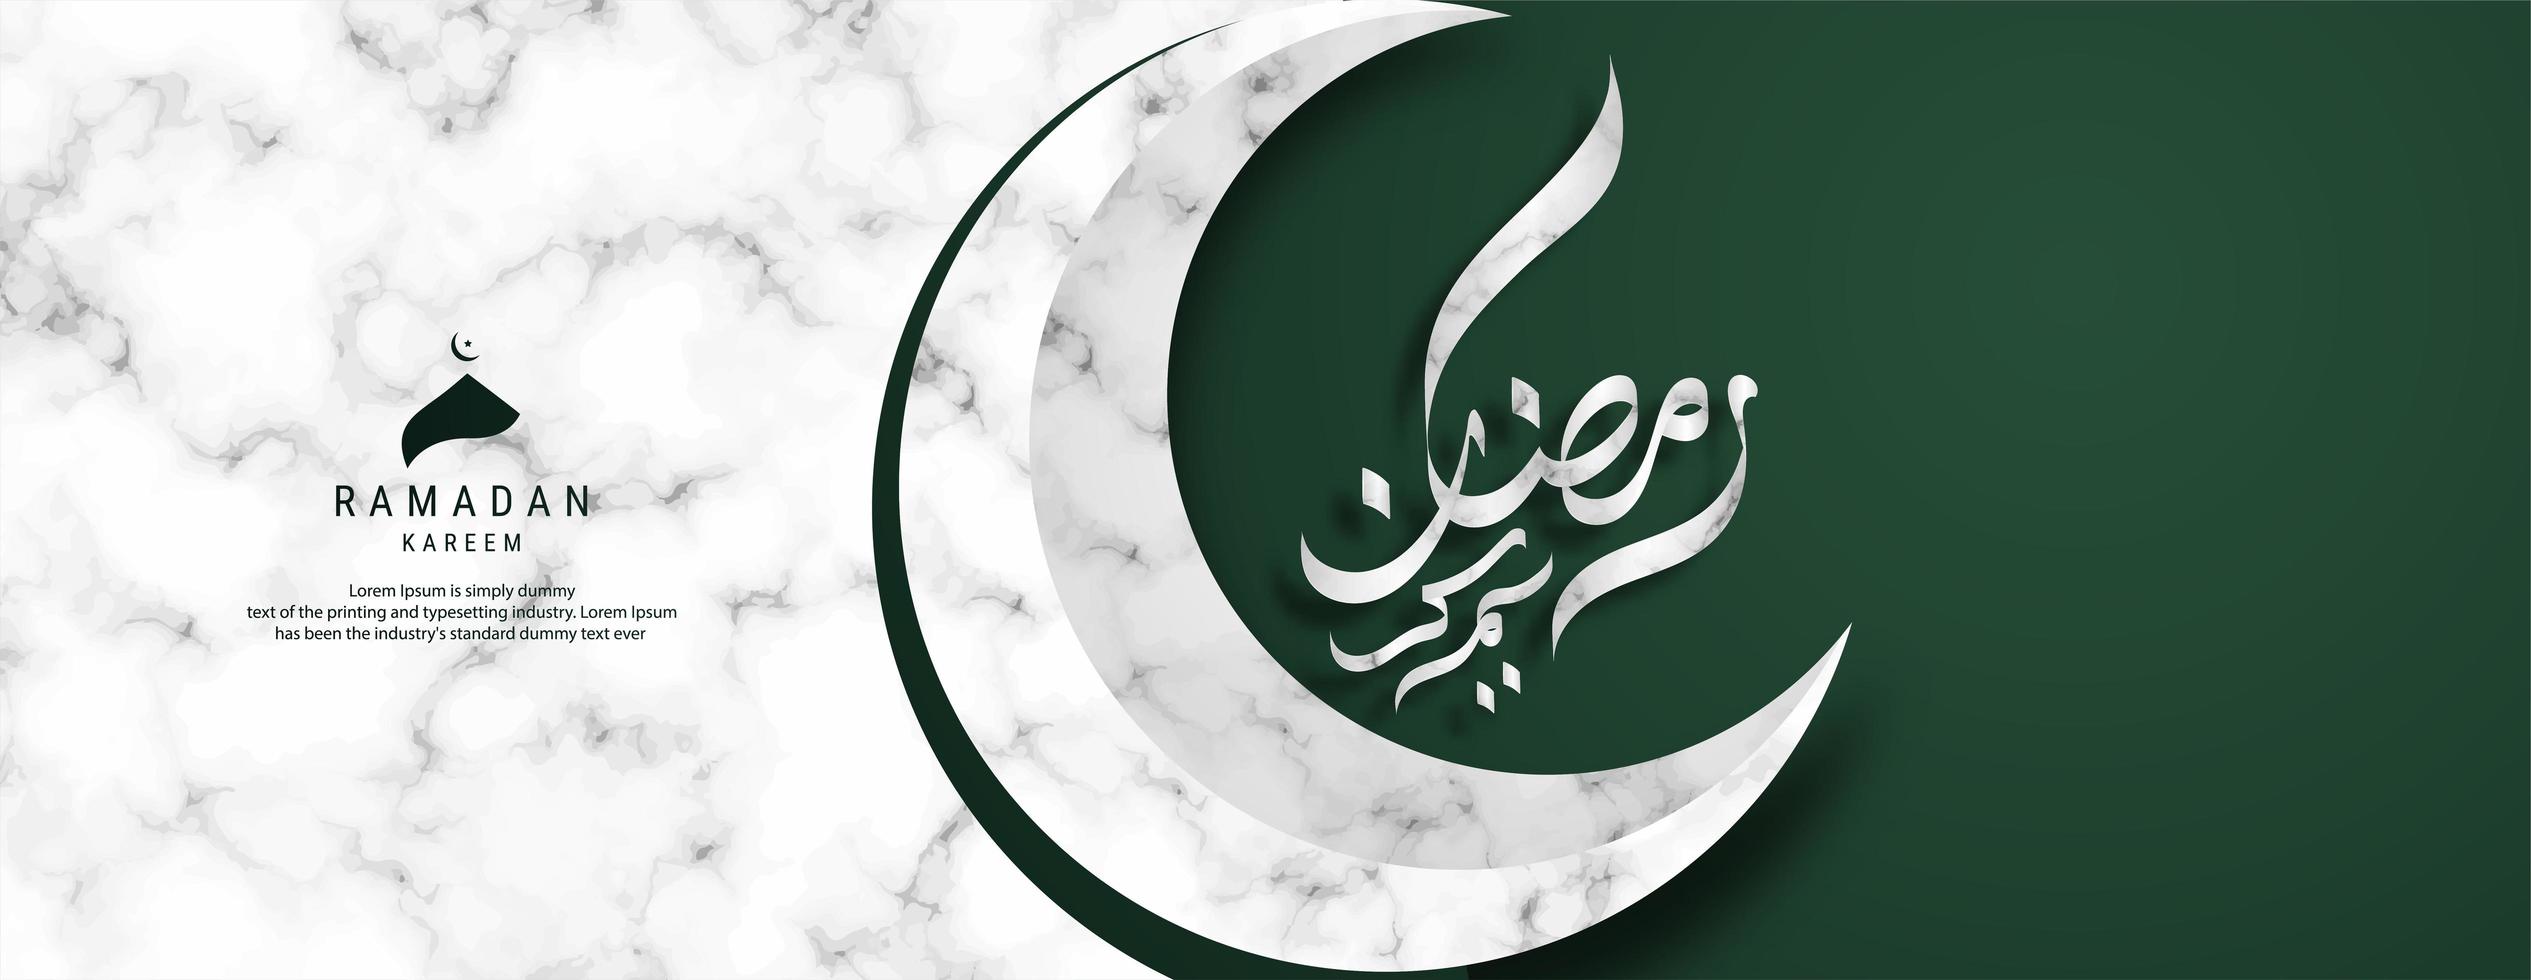 ramadan kareem halve maan kalligrafie banner vector